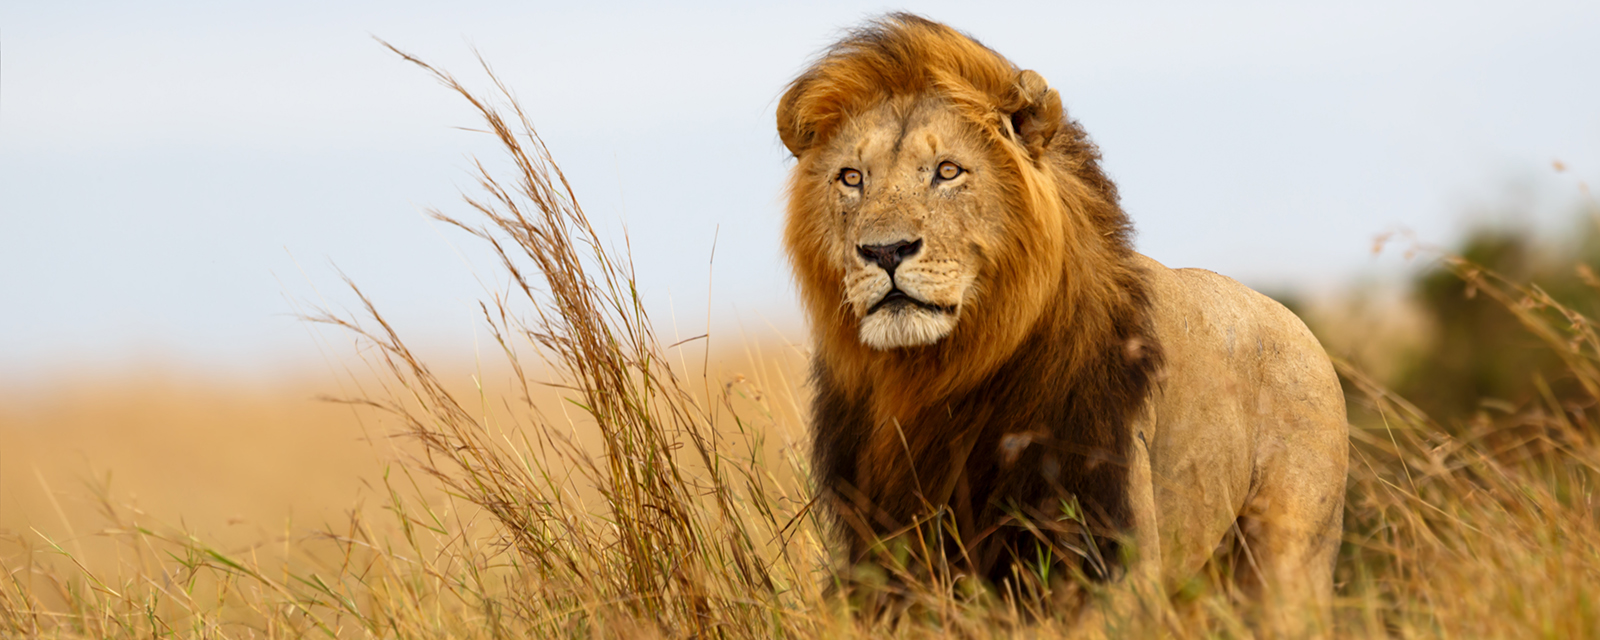 Lion gazes out over savanna 